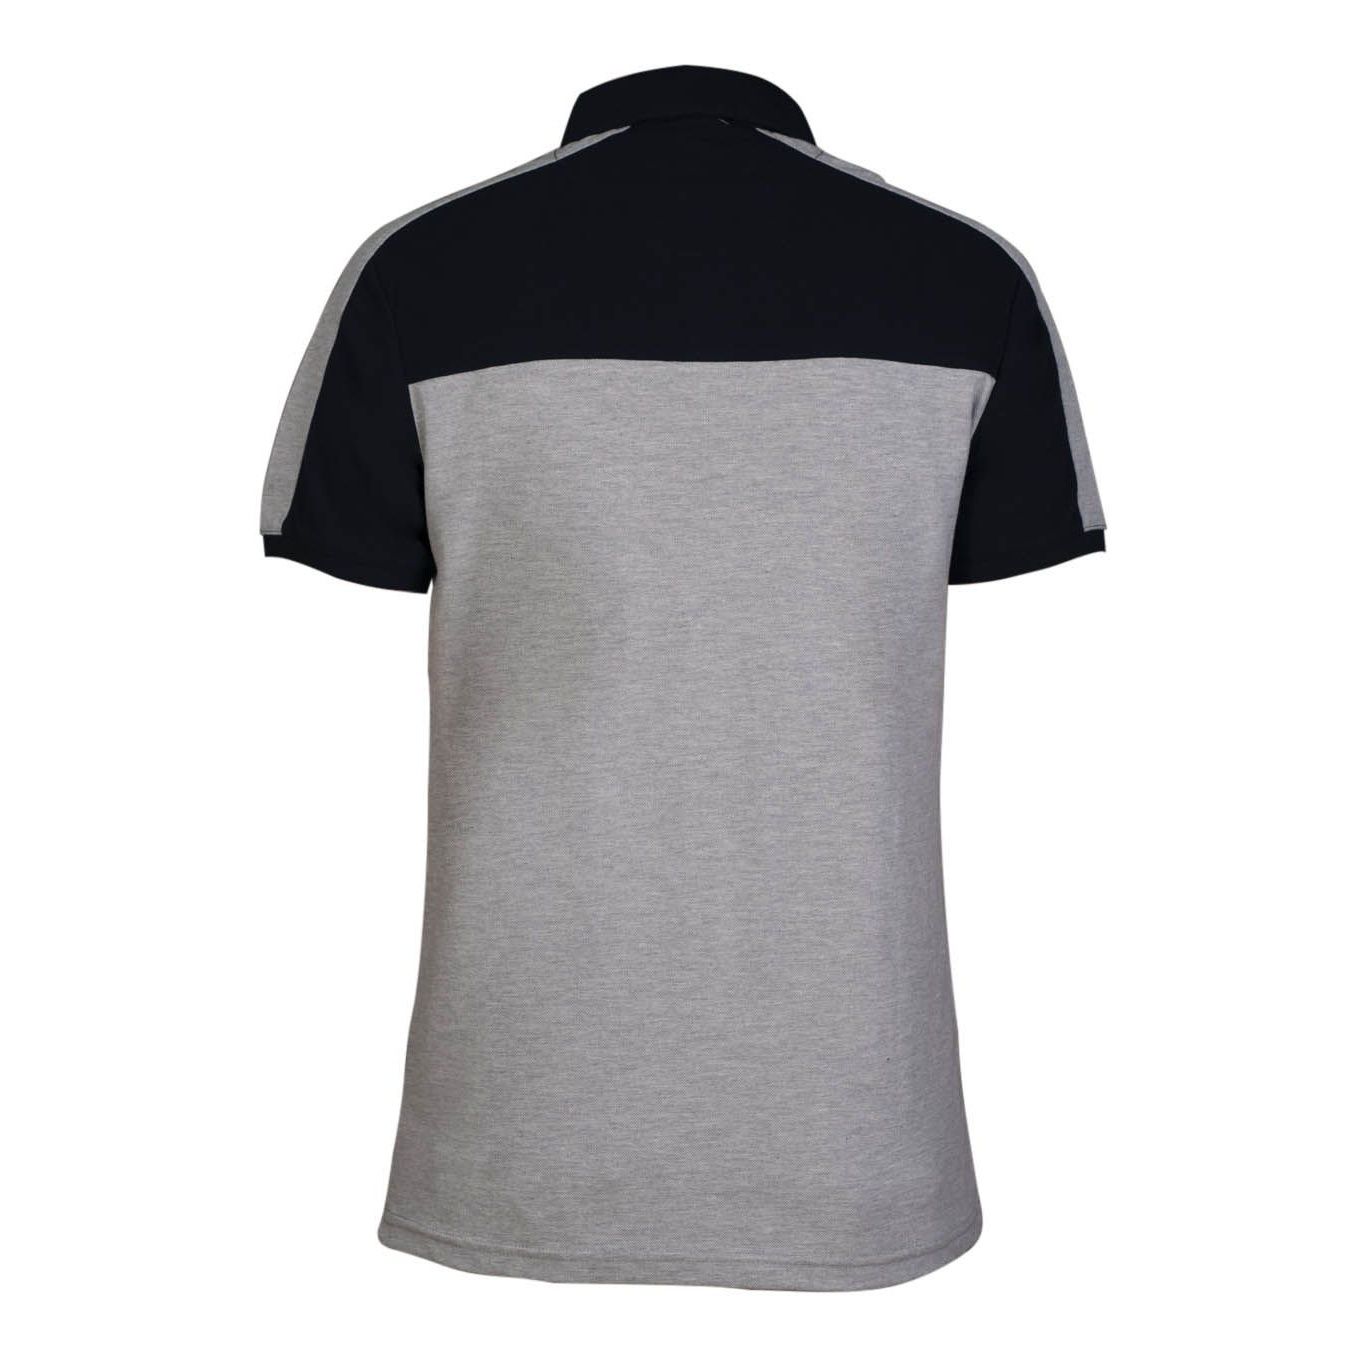 پولو شرت مردانه مدل sprd کد 256-285 